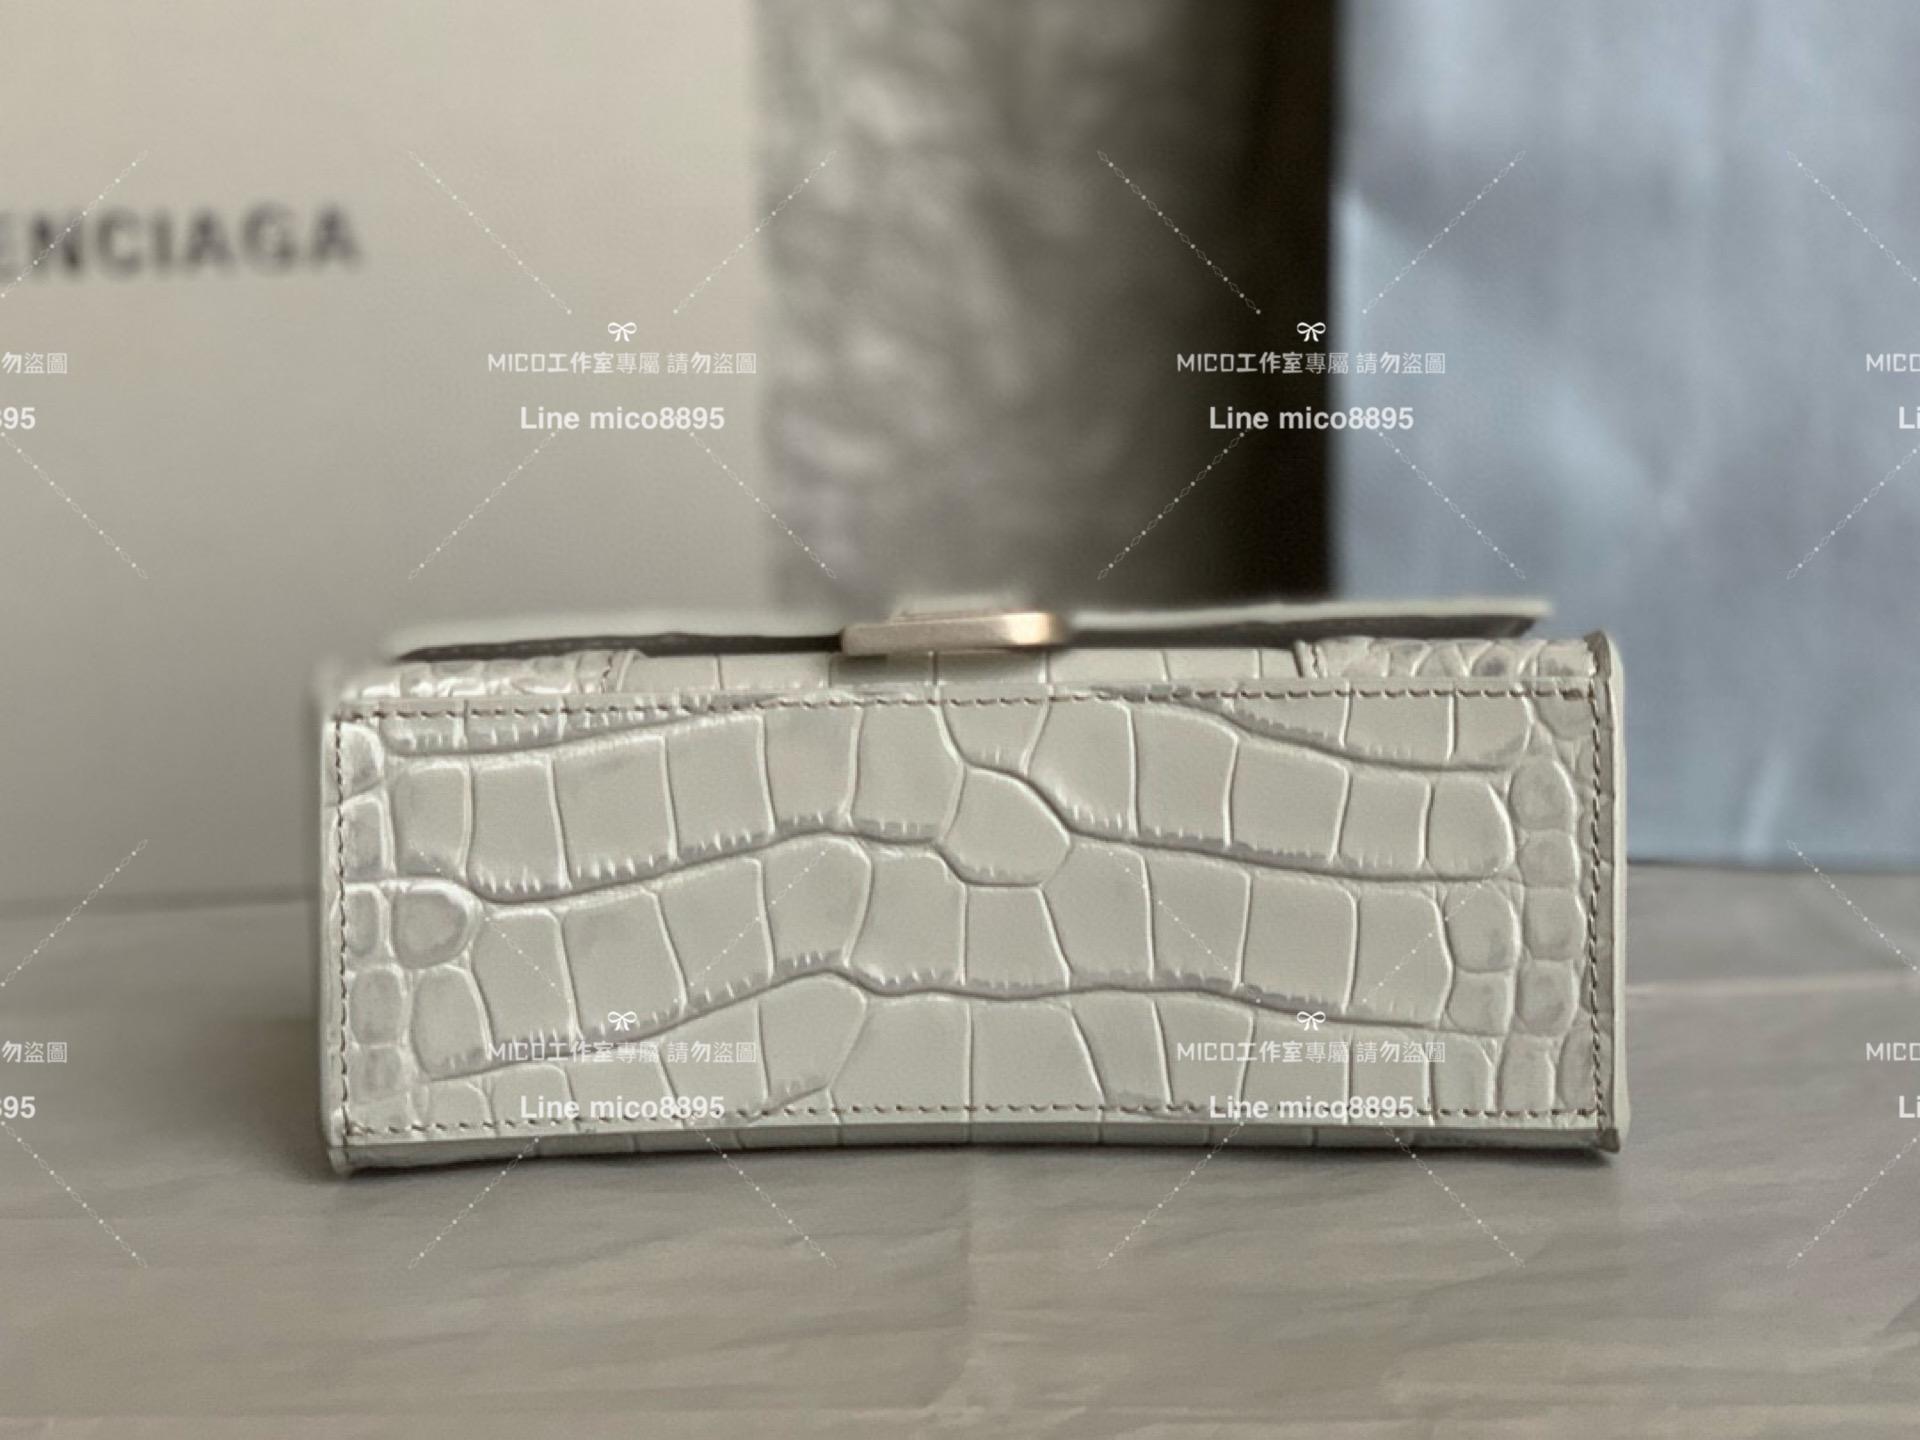 Balenciaga 灰色銀釦 鱷魚壓紋皮革 搭配小羊皮內裏 沙漏包 XS 19cm